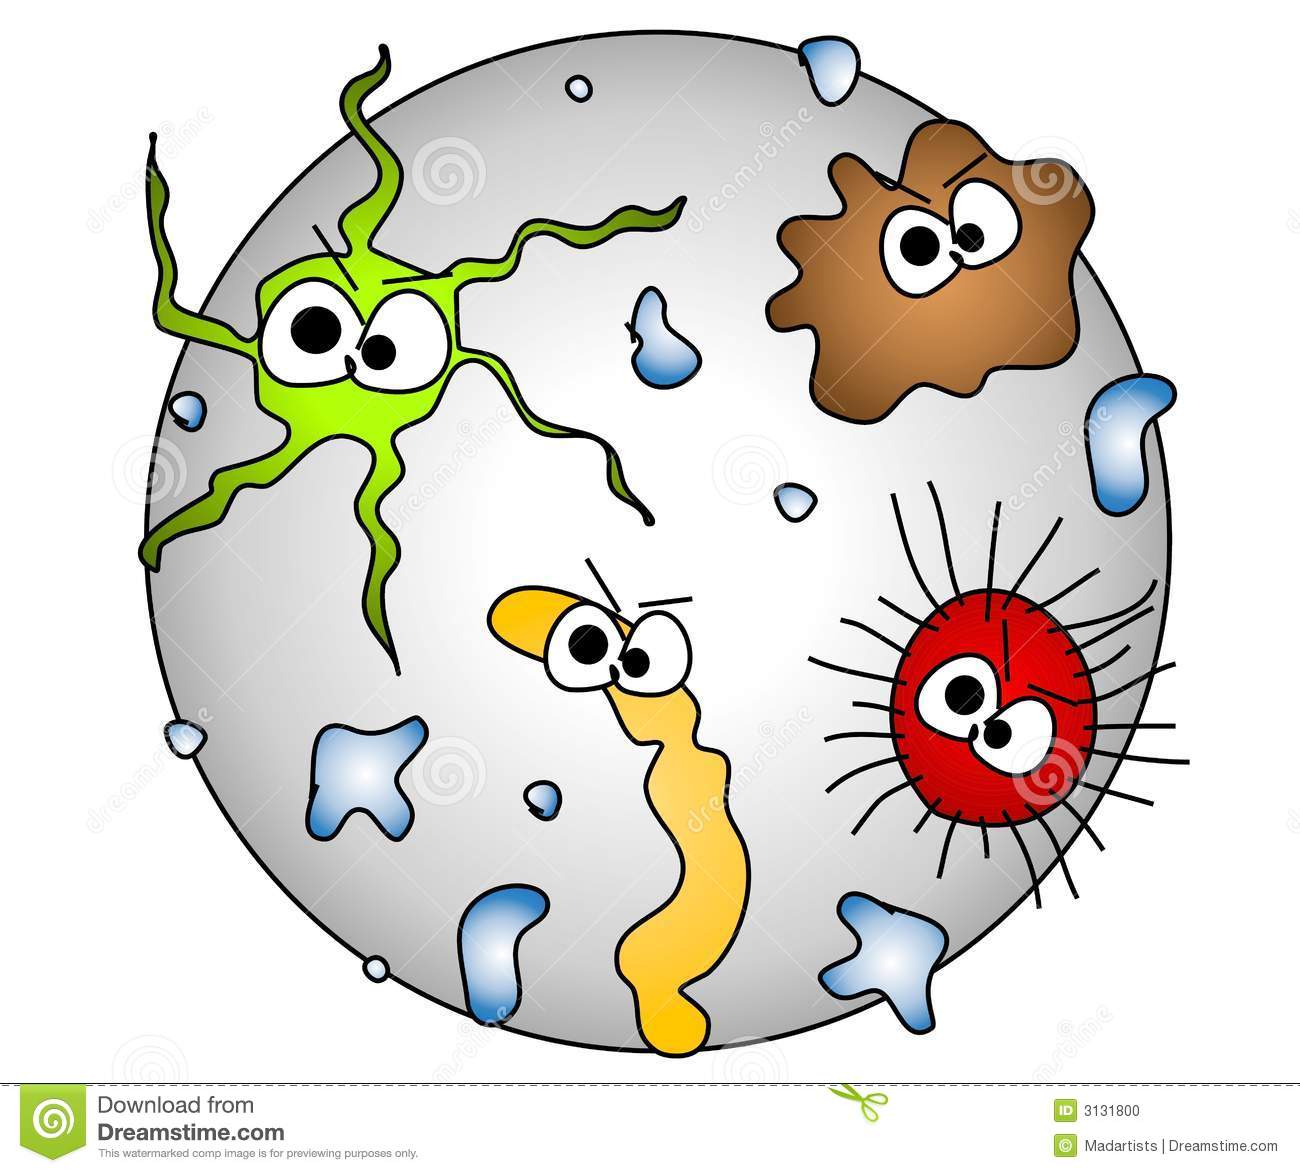 Clip Art Cartoon Illustration Of Nasty Looking Germs Viruses Or